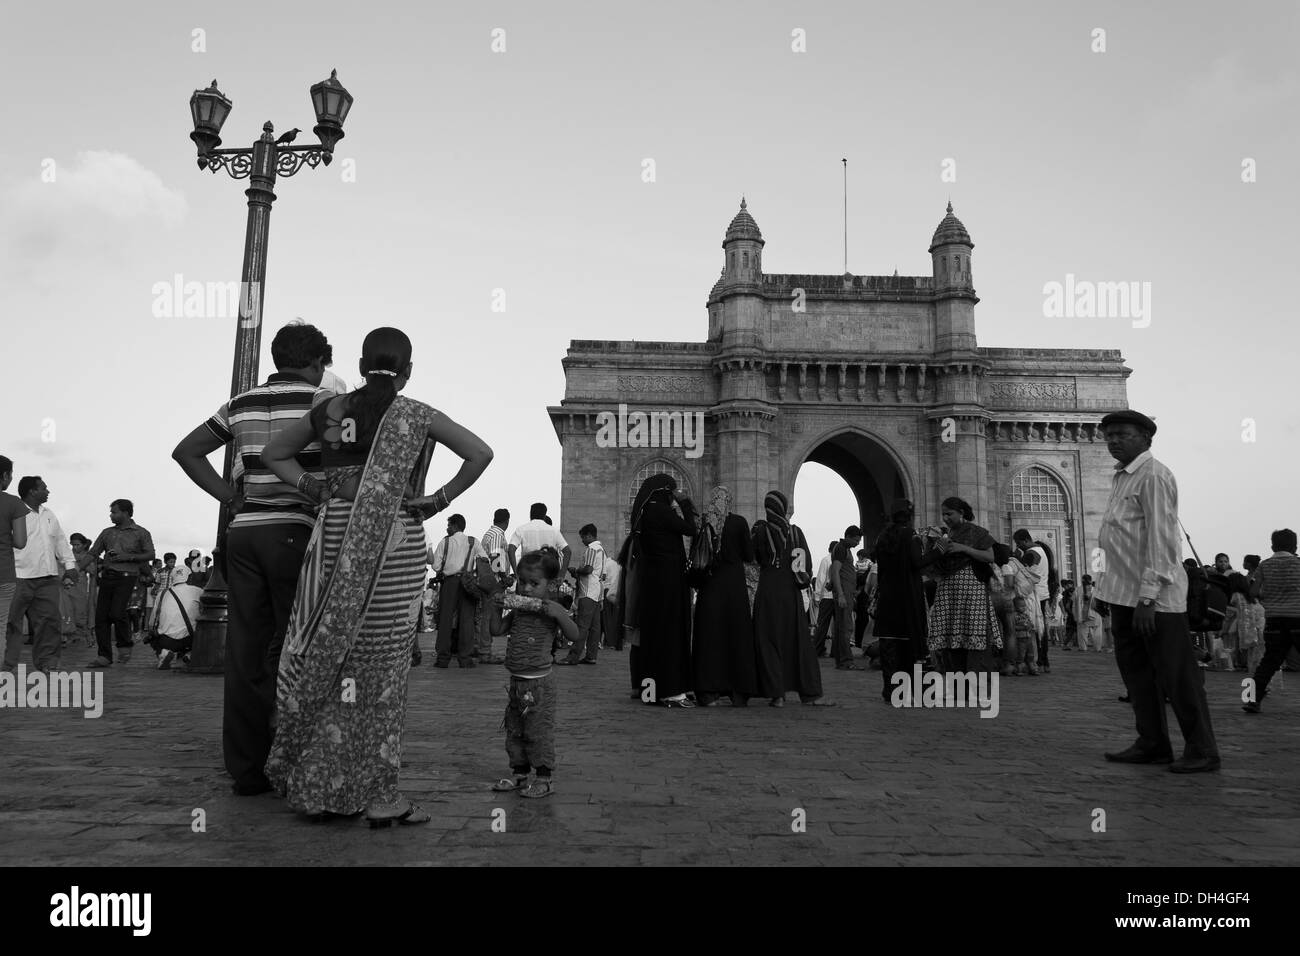 Menschen am Gateway of India Apollo Bunder Colaba Mumbai Maharashtra Indien Asia Juni 2012 Stockfoto